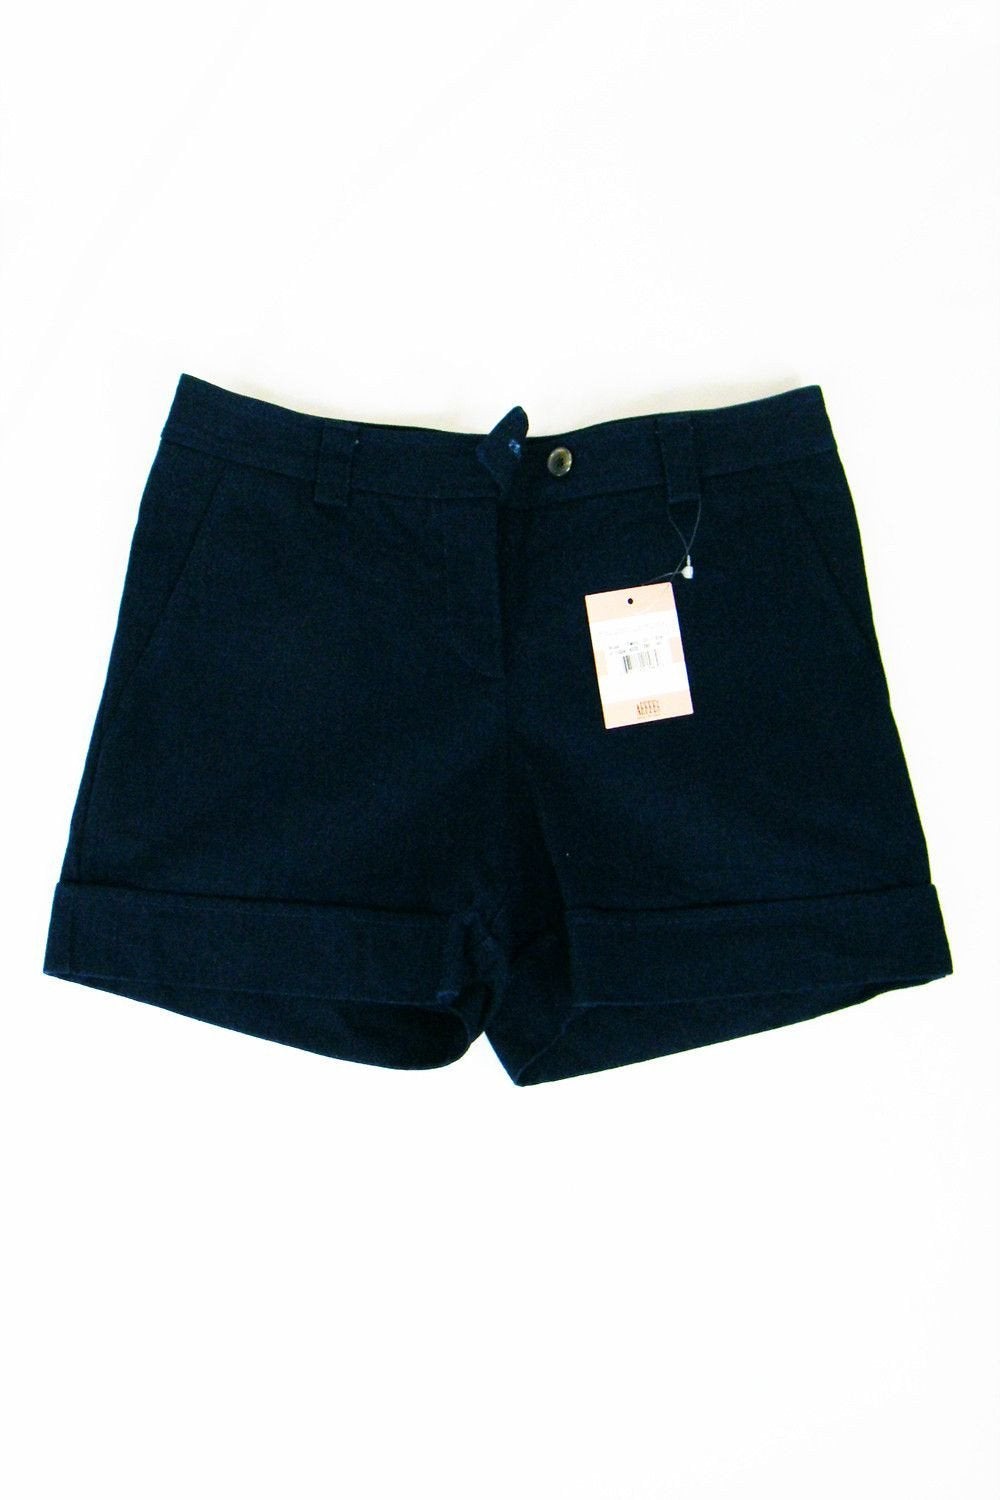 MOSCHINO CHEAP & CHIC denim shorts (UK 12)-Moschino Cheap and Chic-The Freperie